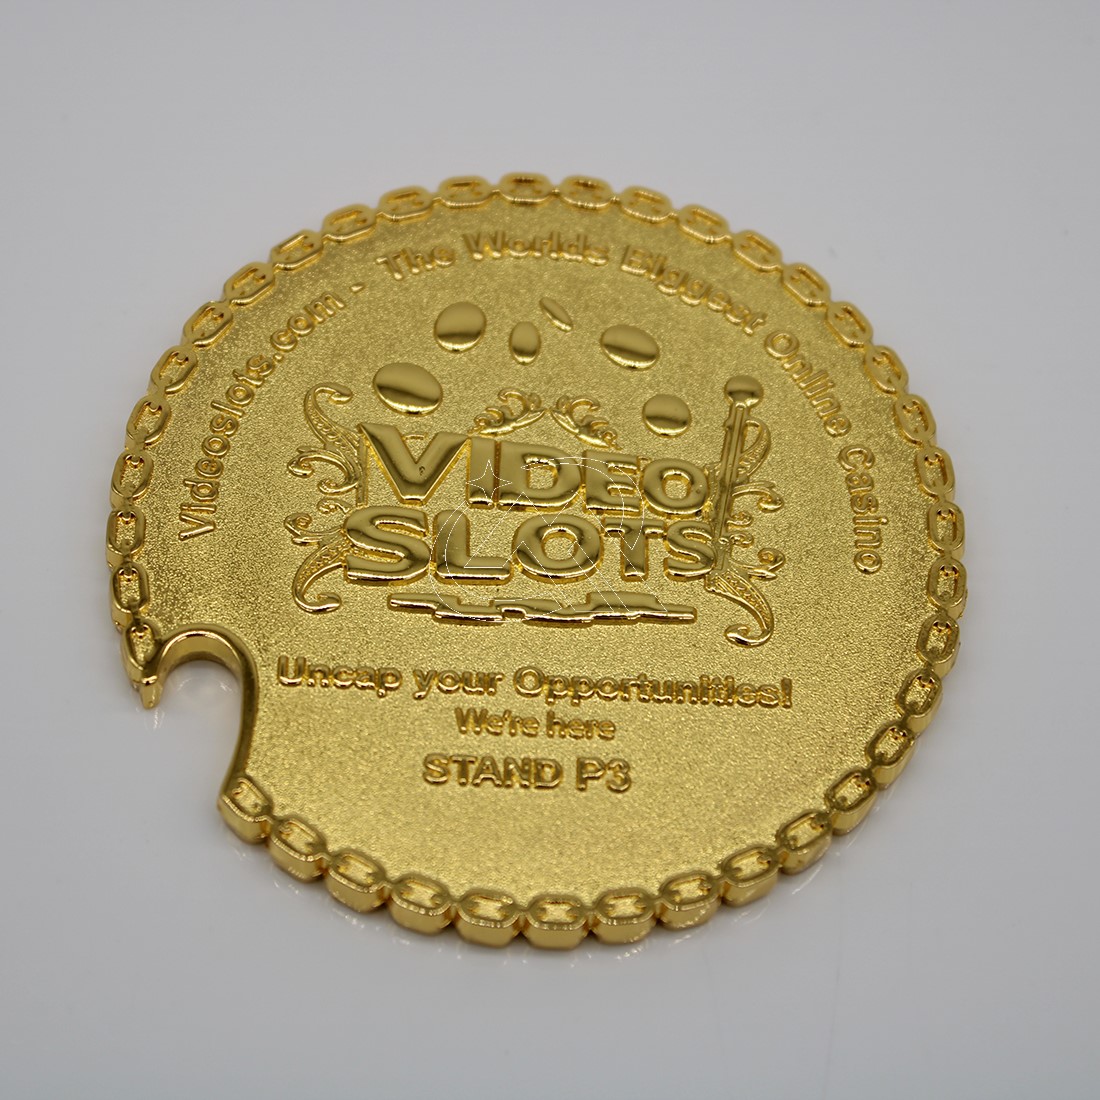 Custom Shiny Medals with sandblasting